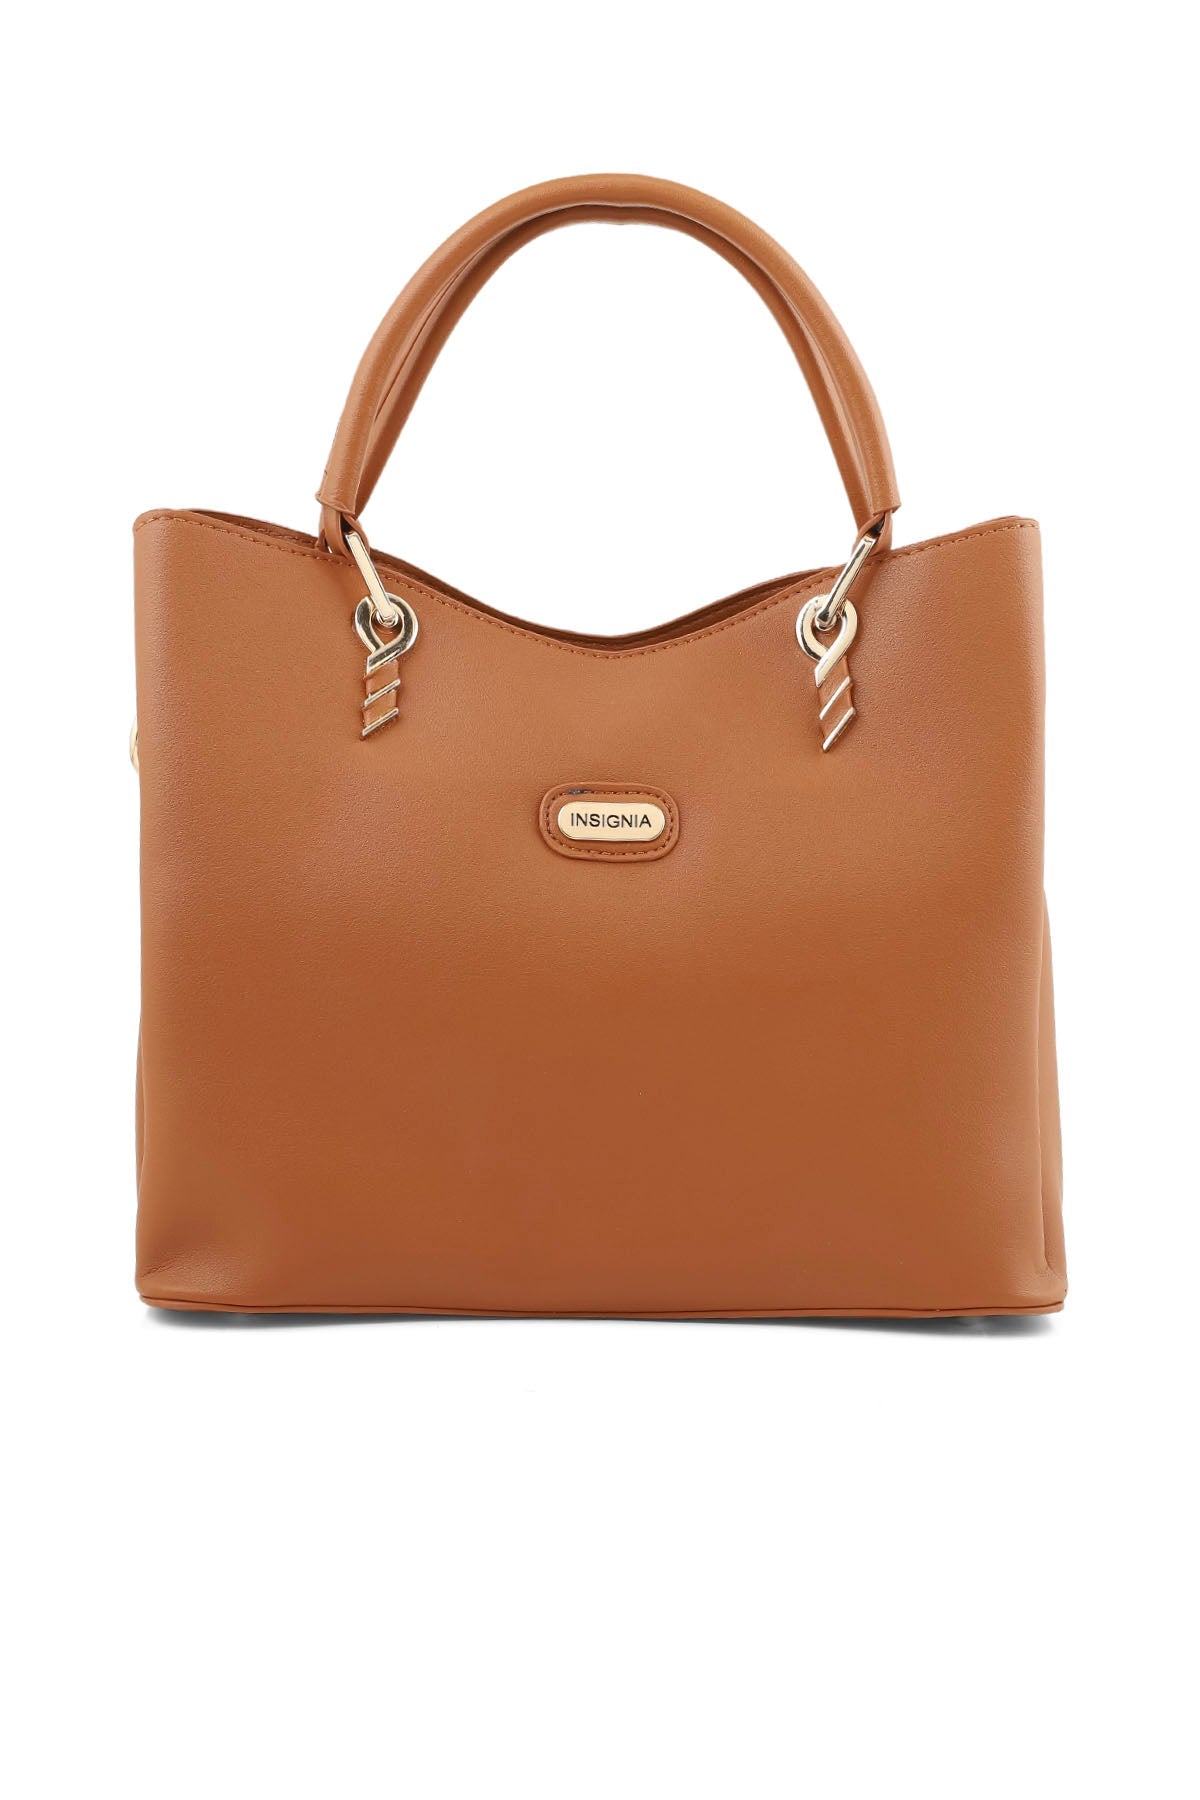 Formal Tote Hand Bags B15058-Brown